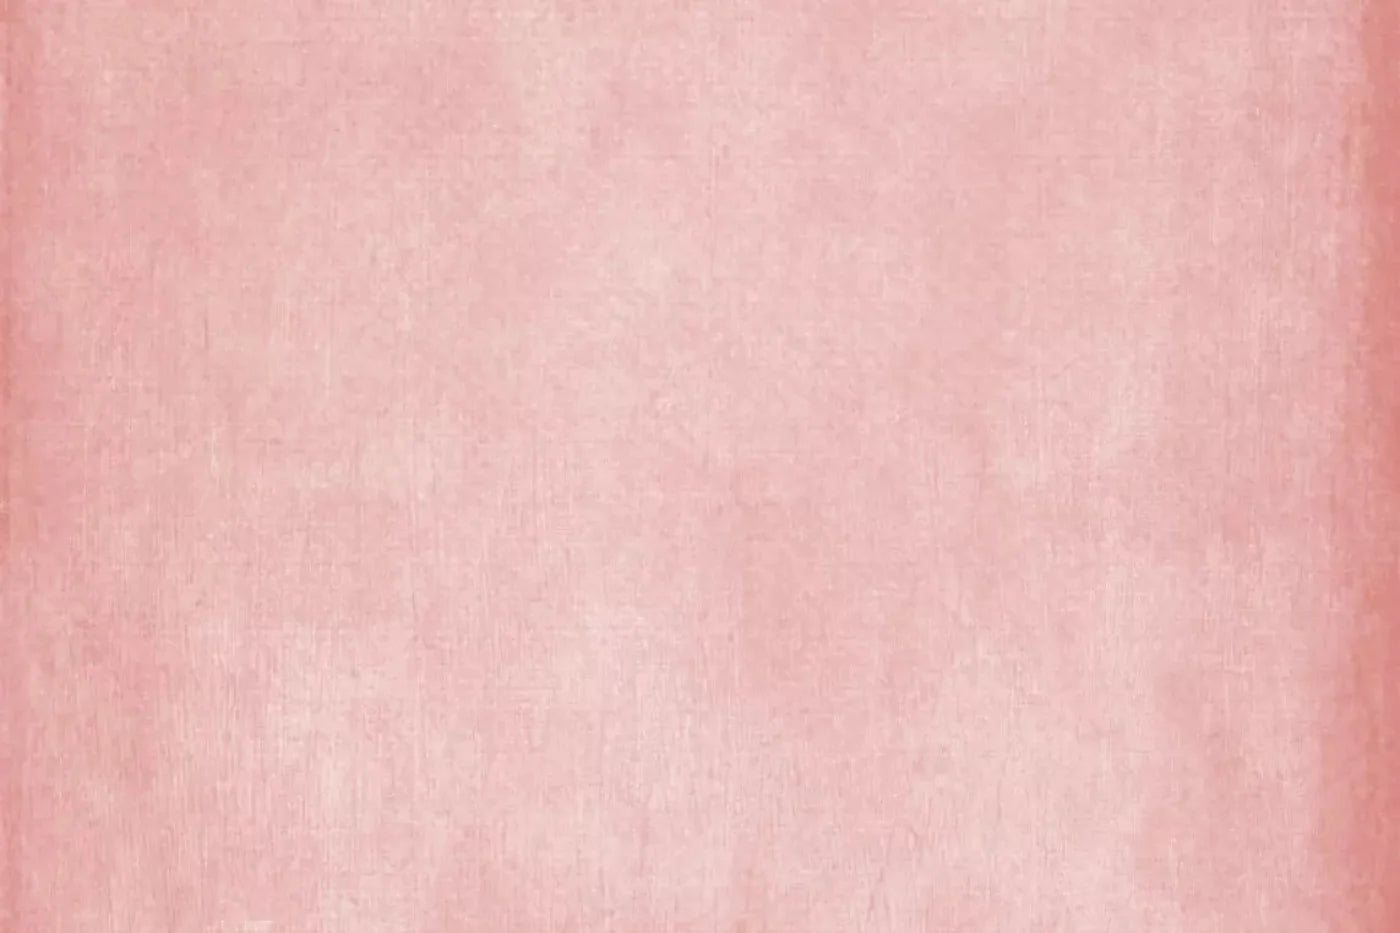 Daydream Pink 5X4 Rubbermat Floor ( 60 X 48 Inch ) Backdrop